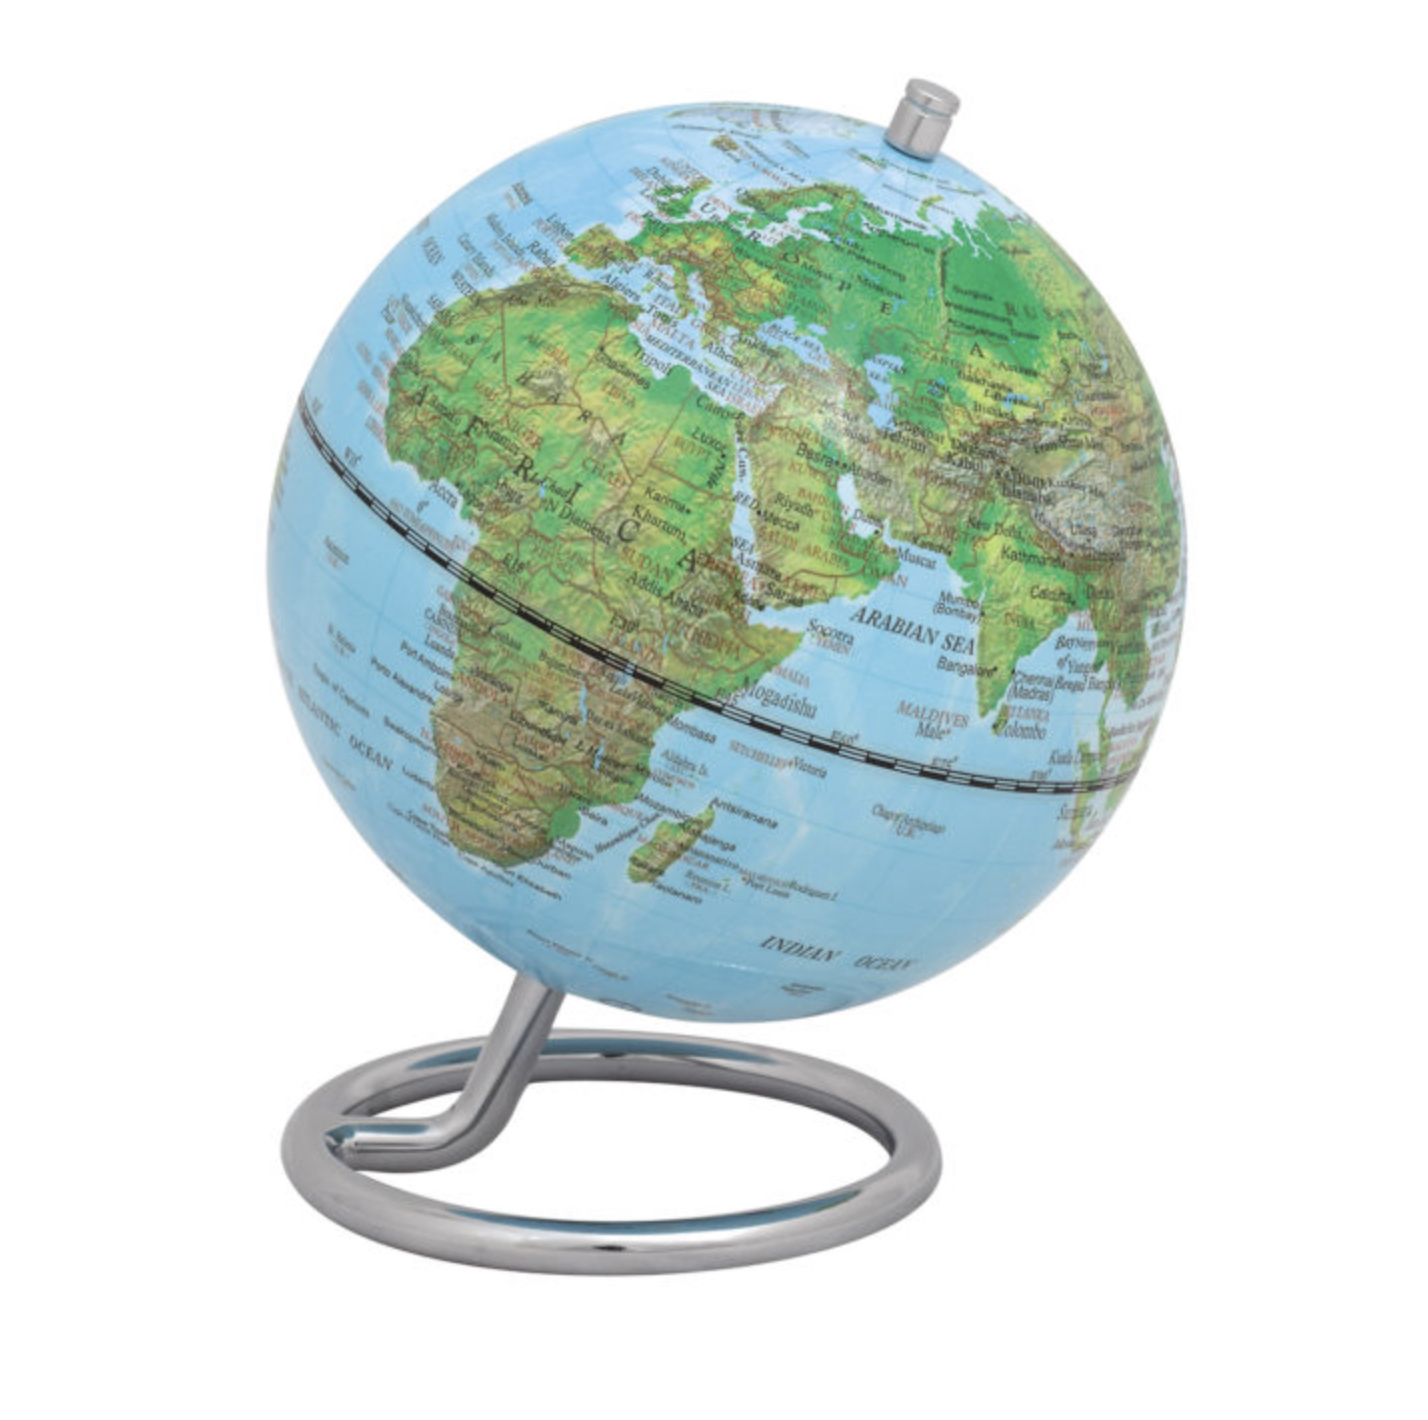 Mini-Globus GALILEI von emform